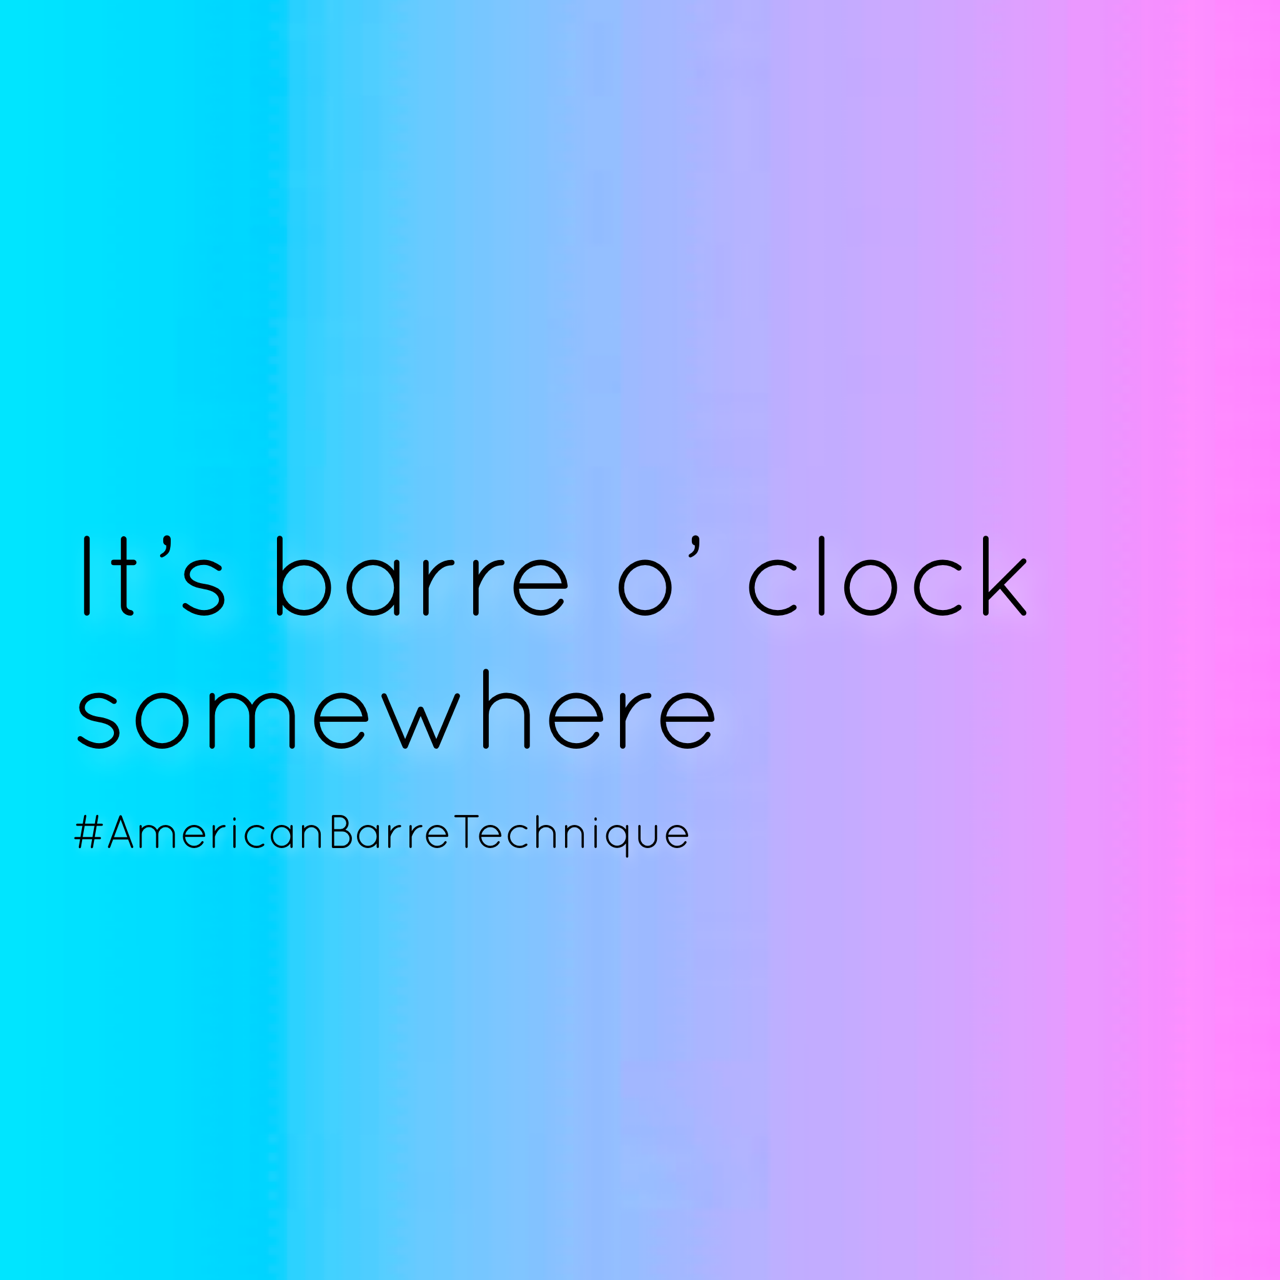 It's barre o' clock somewhere.